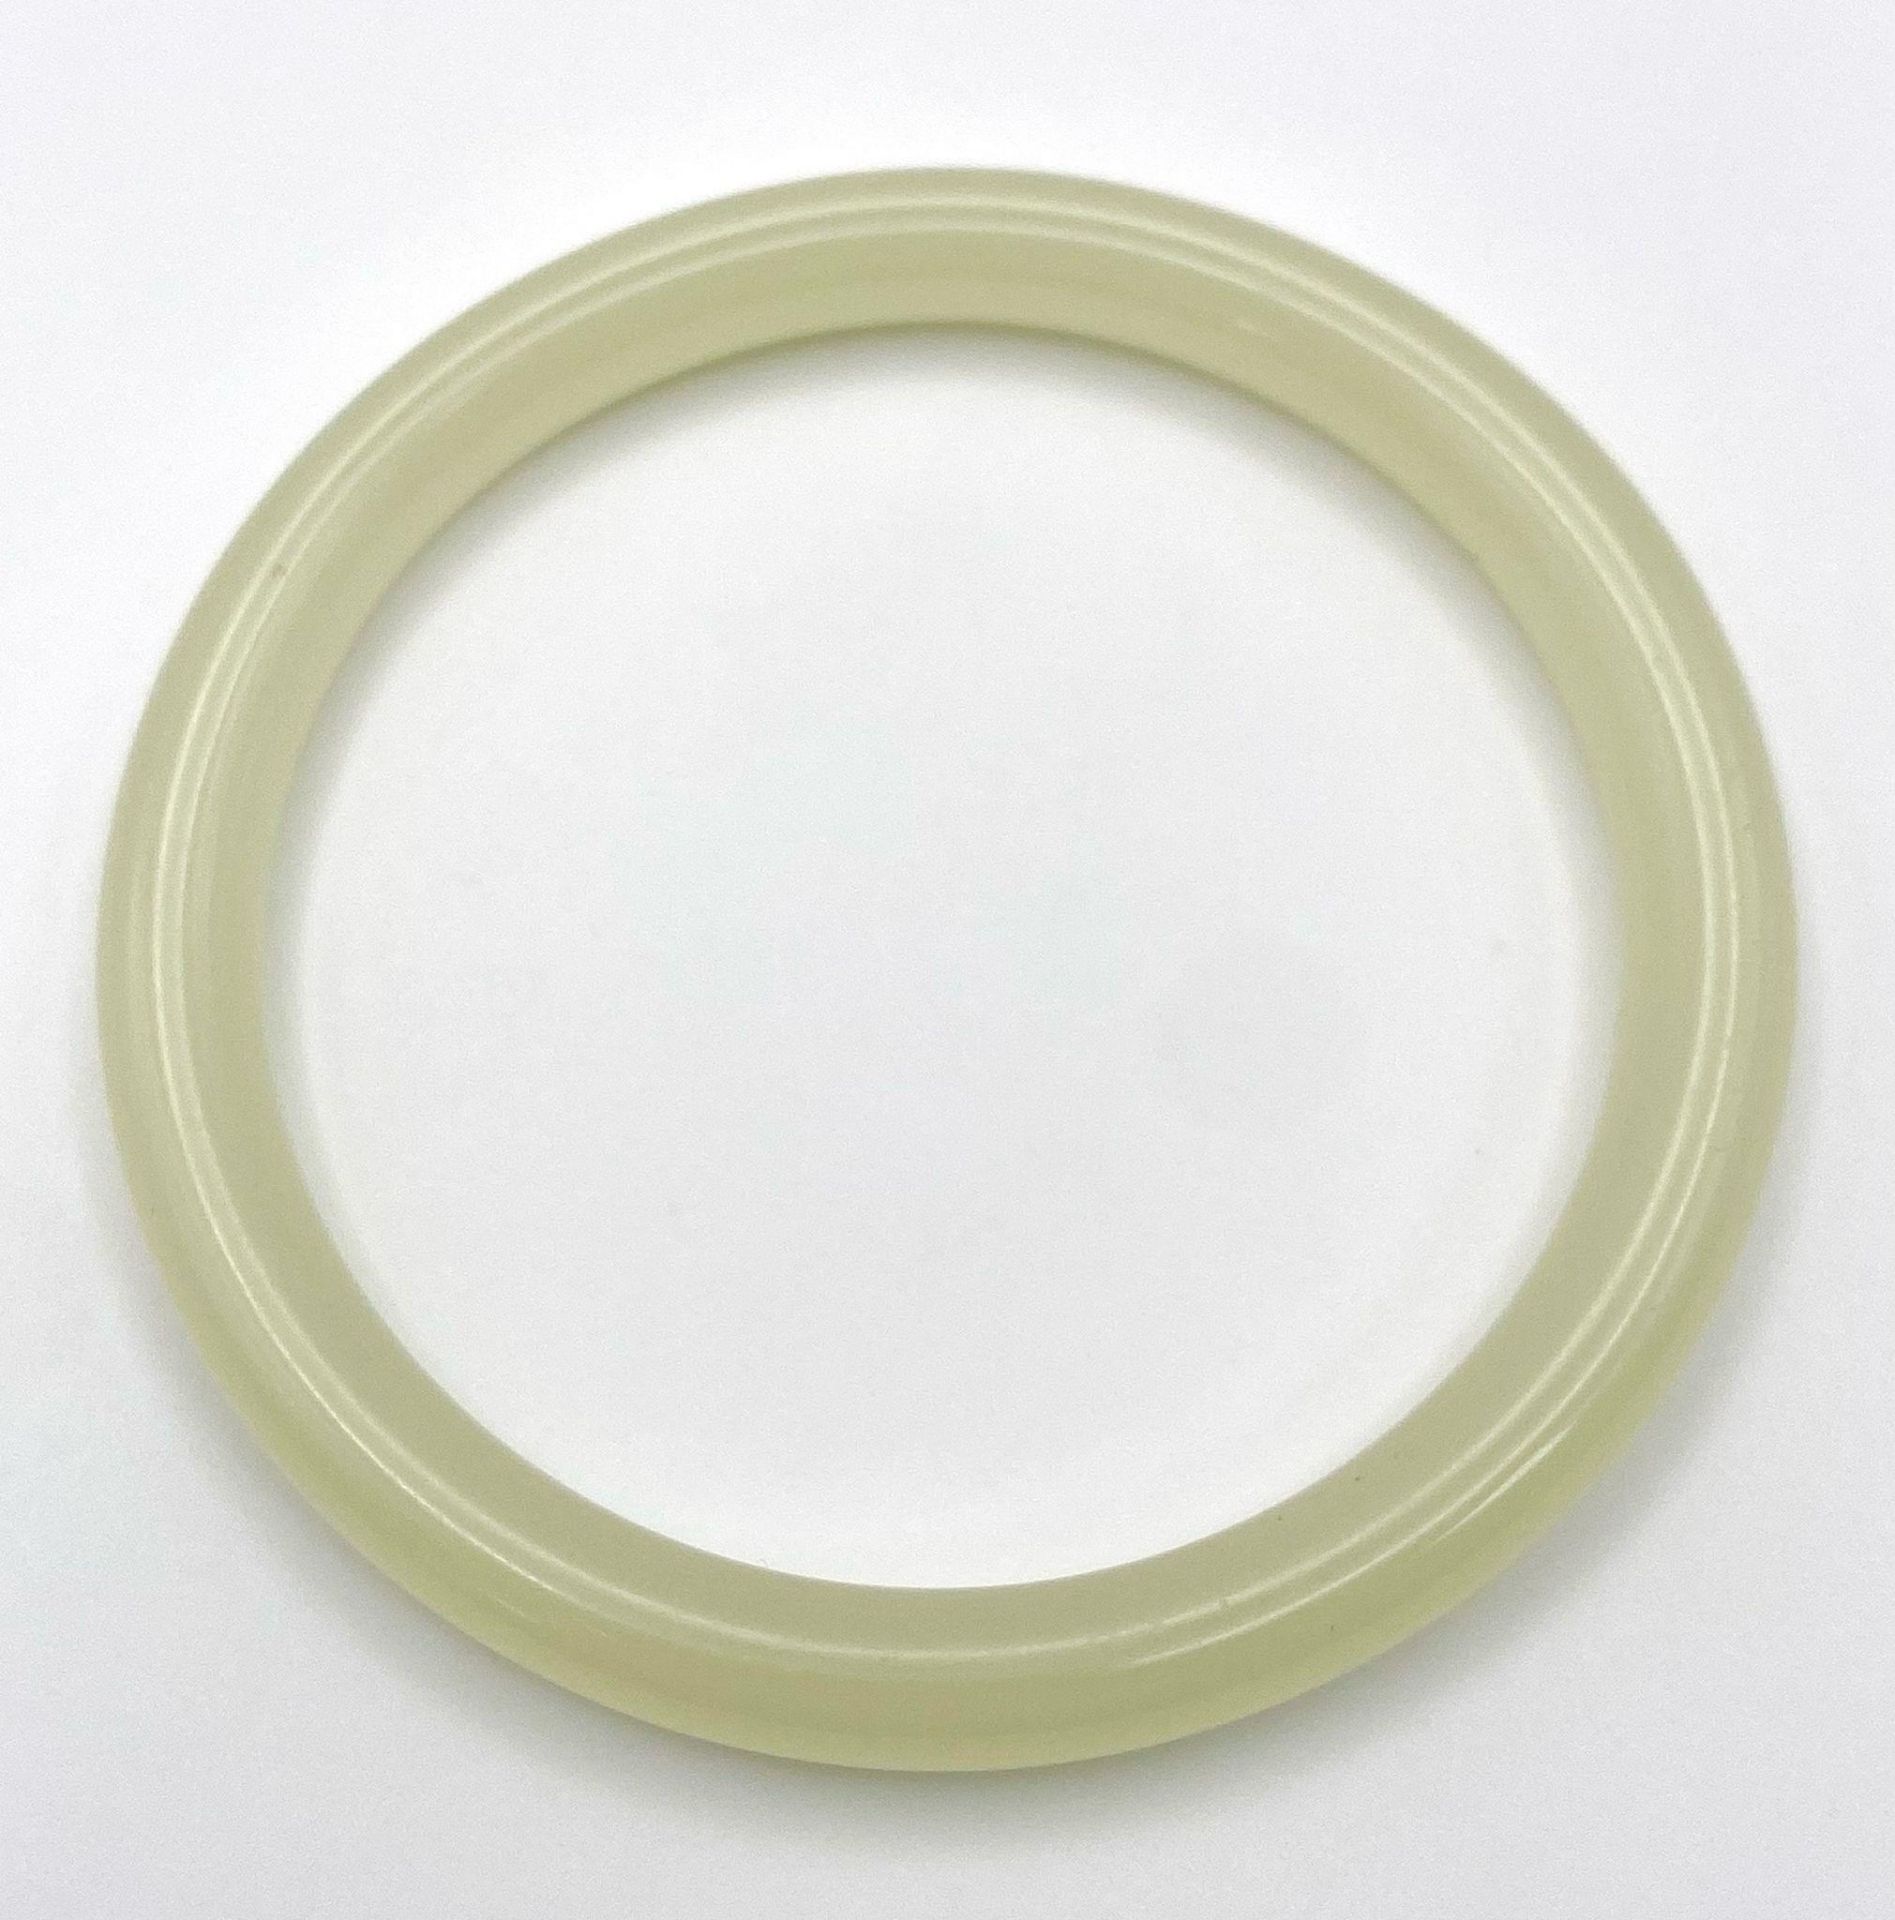 A Pale Green Thin Jade Bangle. 8mm width. 6cm inner diameter. - Image 2 of 3